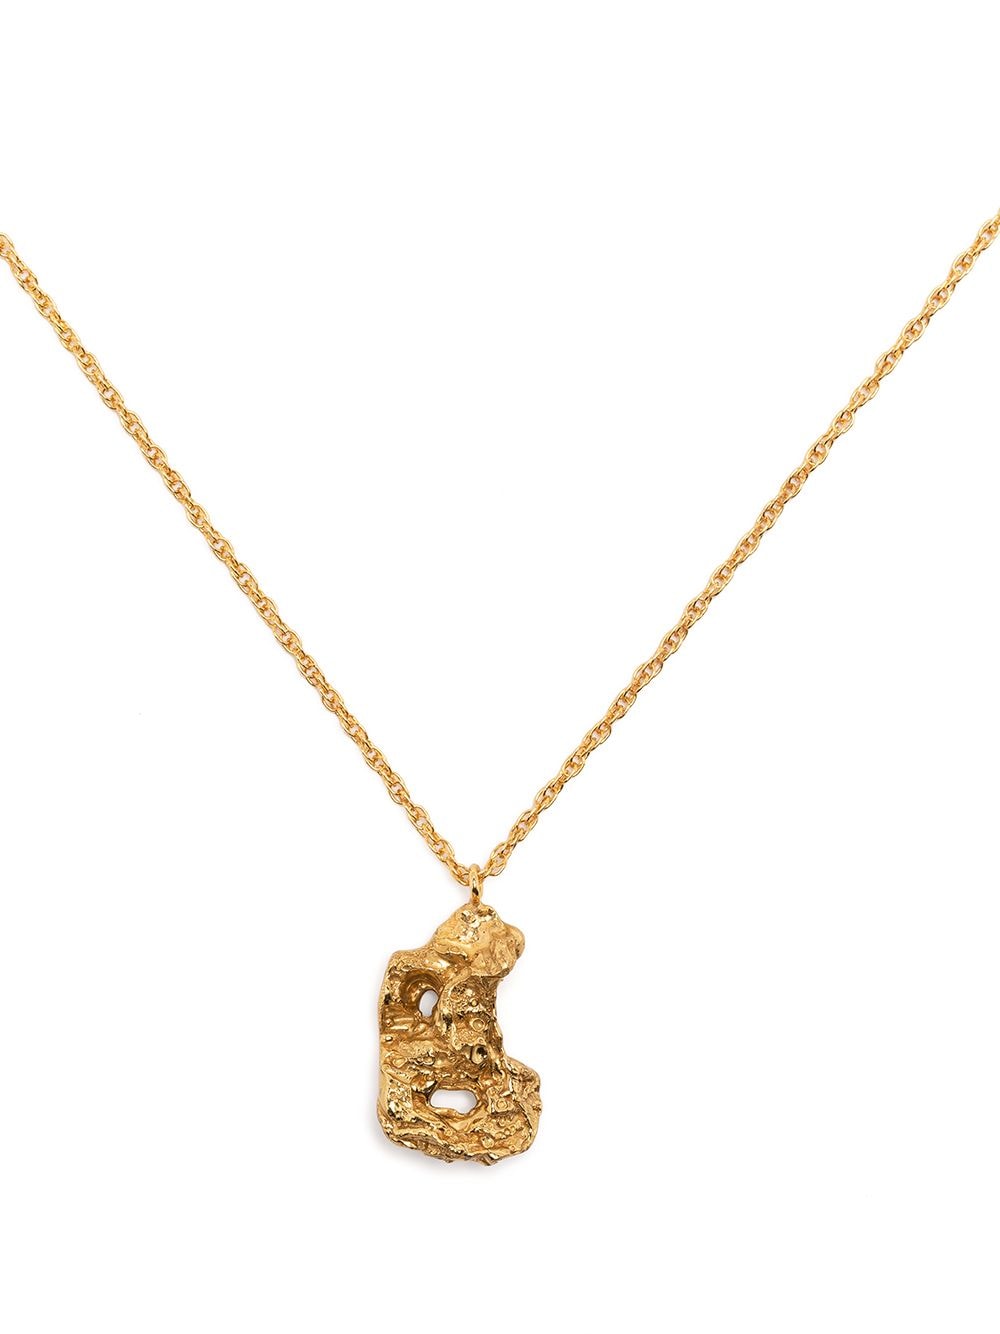 B alphabet pendant necklace